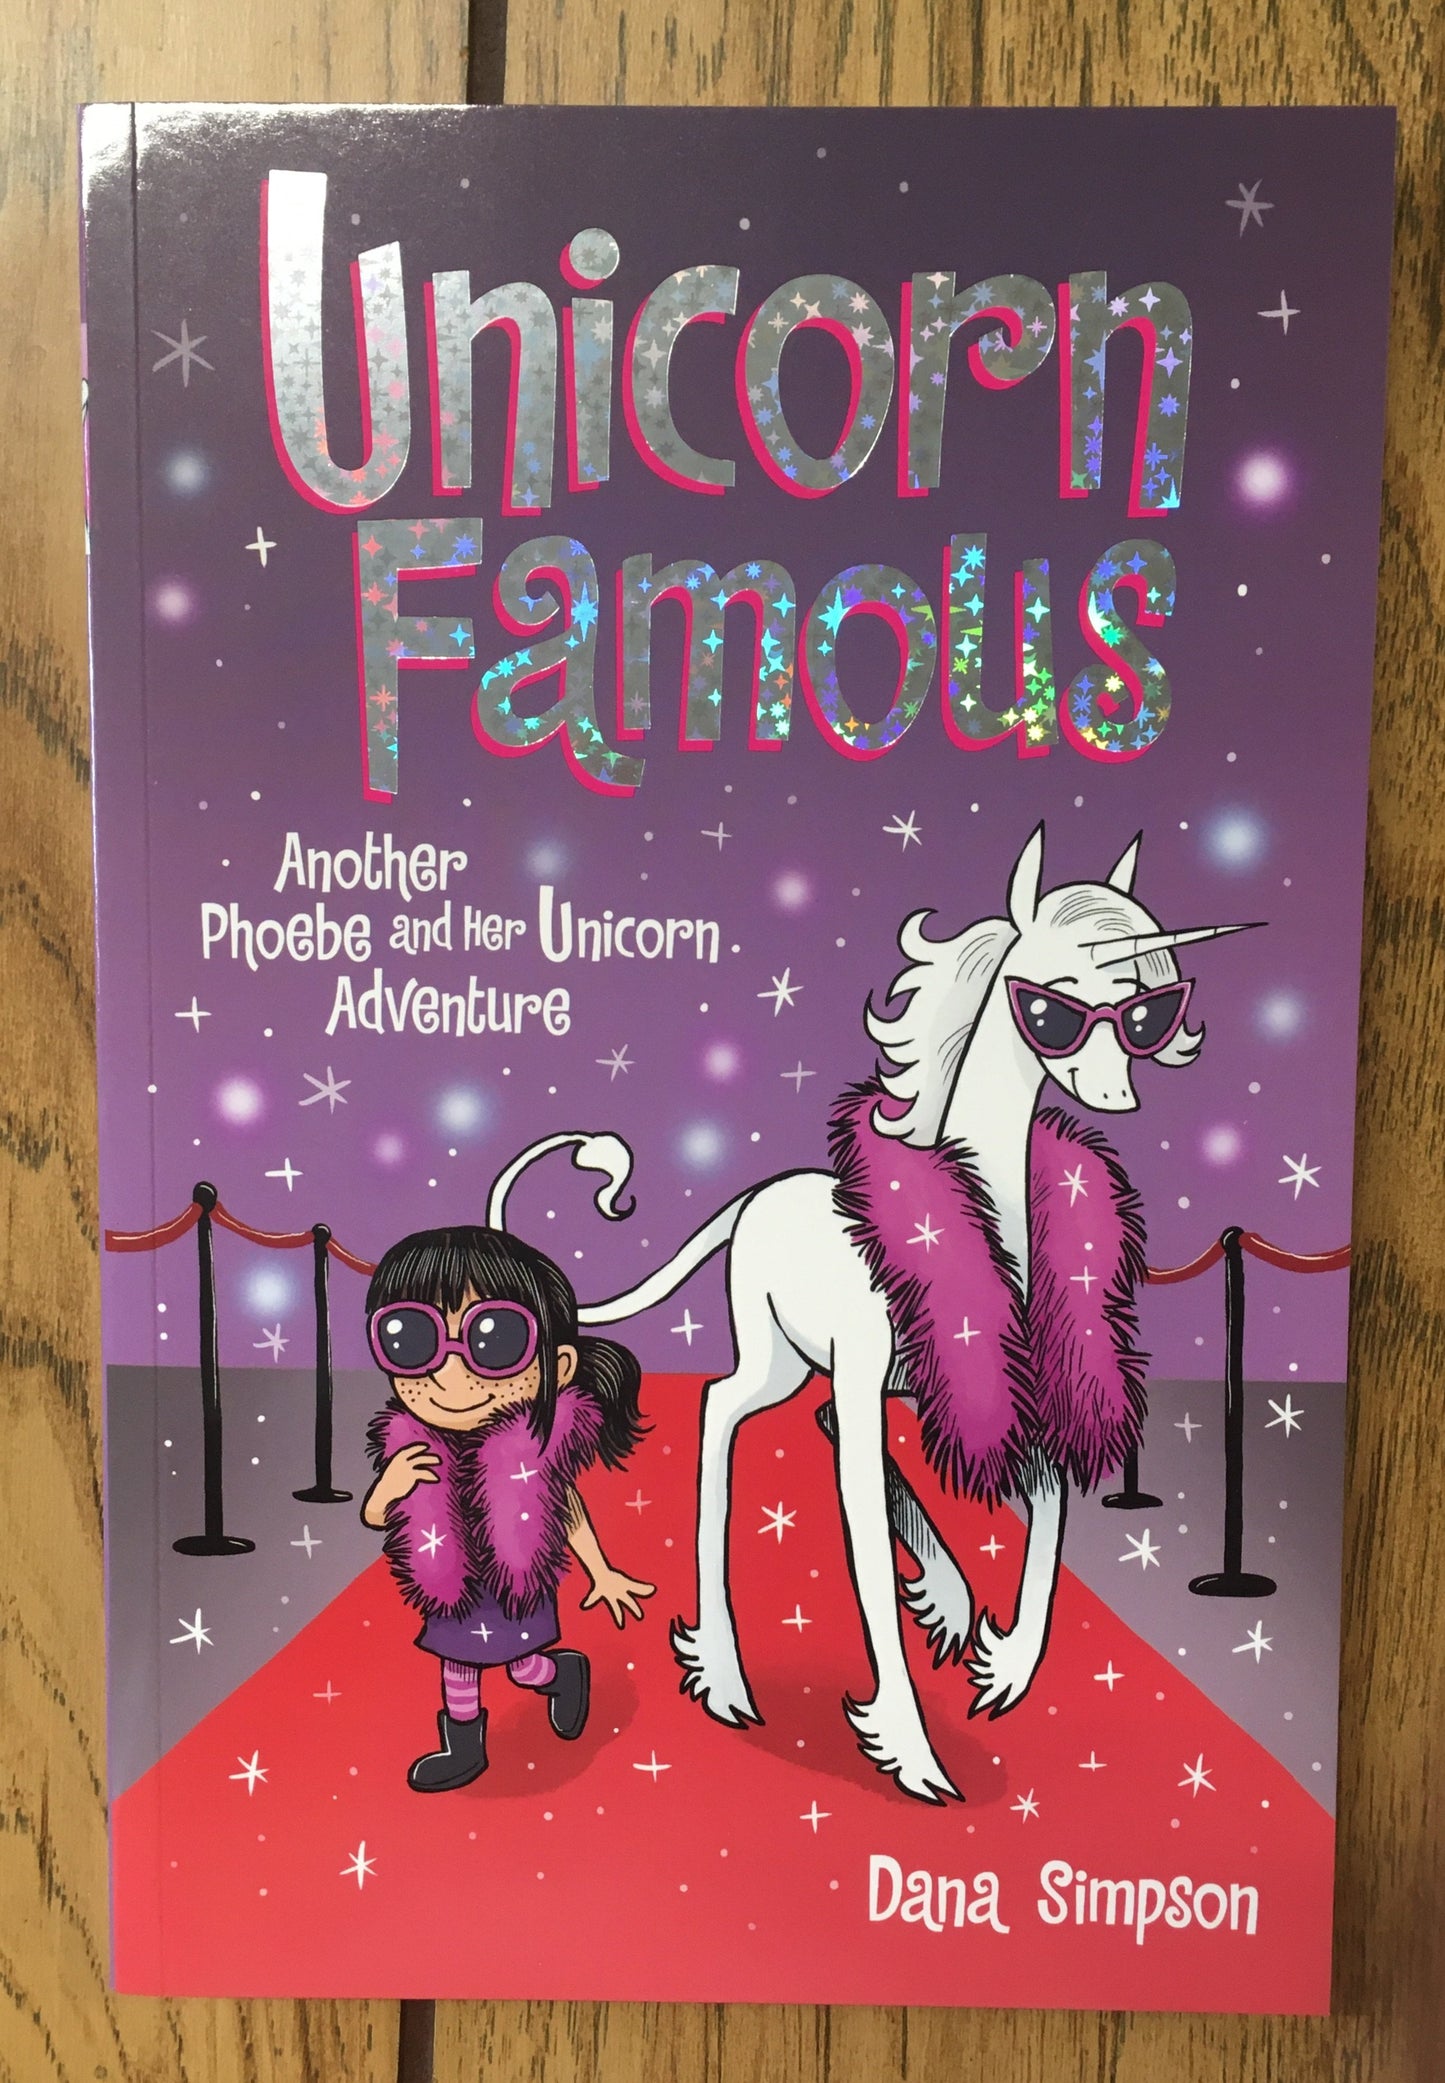 Unicorn Famous (Phoebe and Her Unicorn #13)